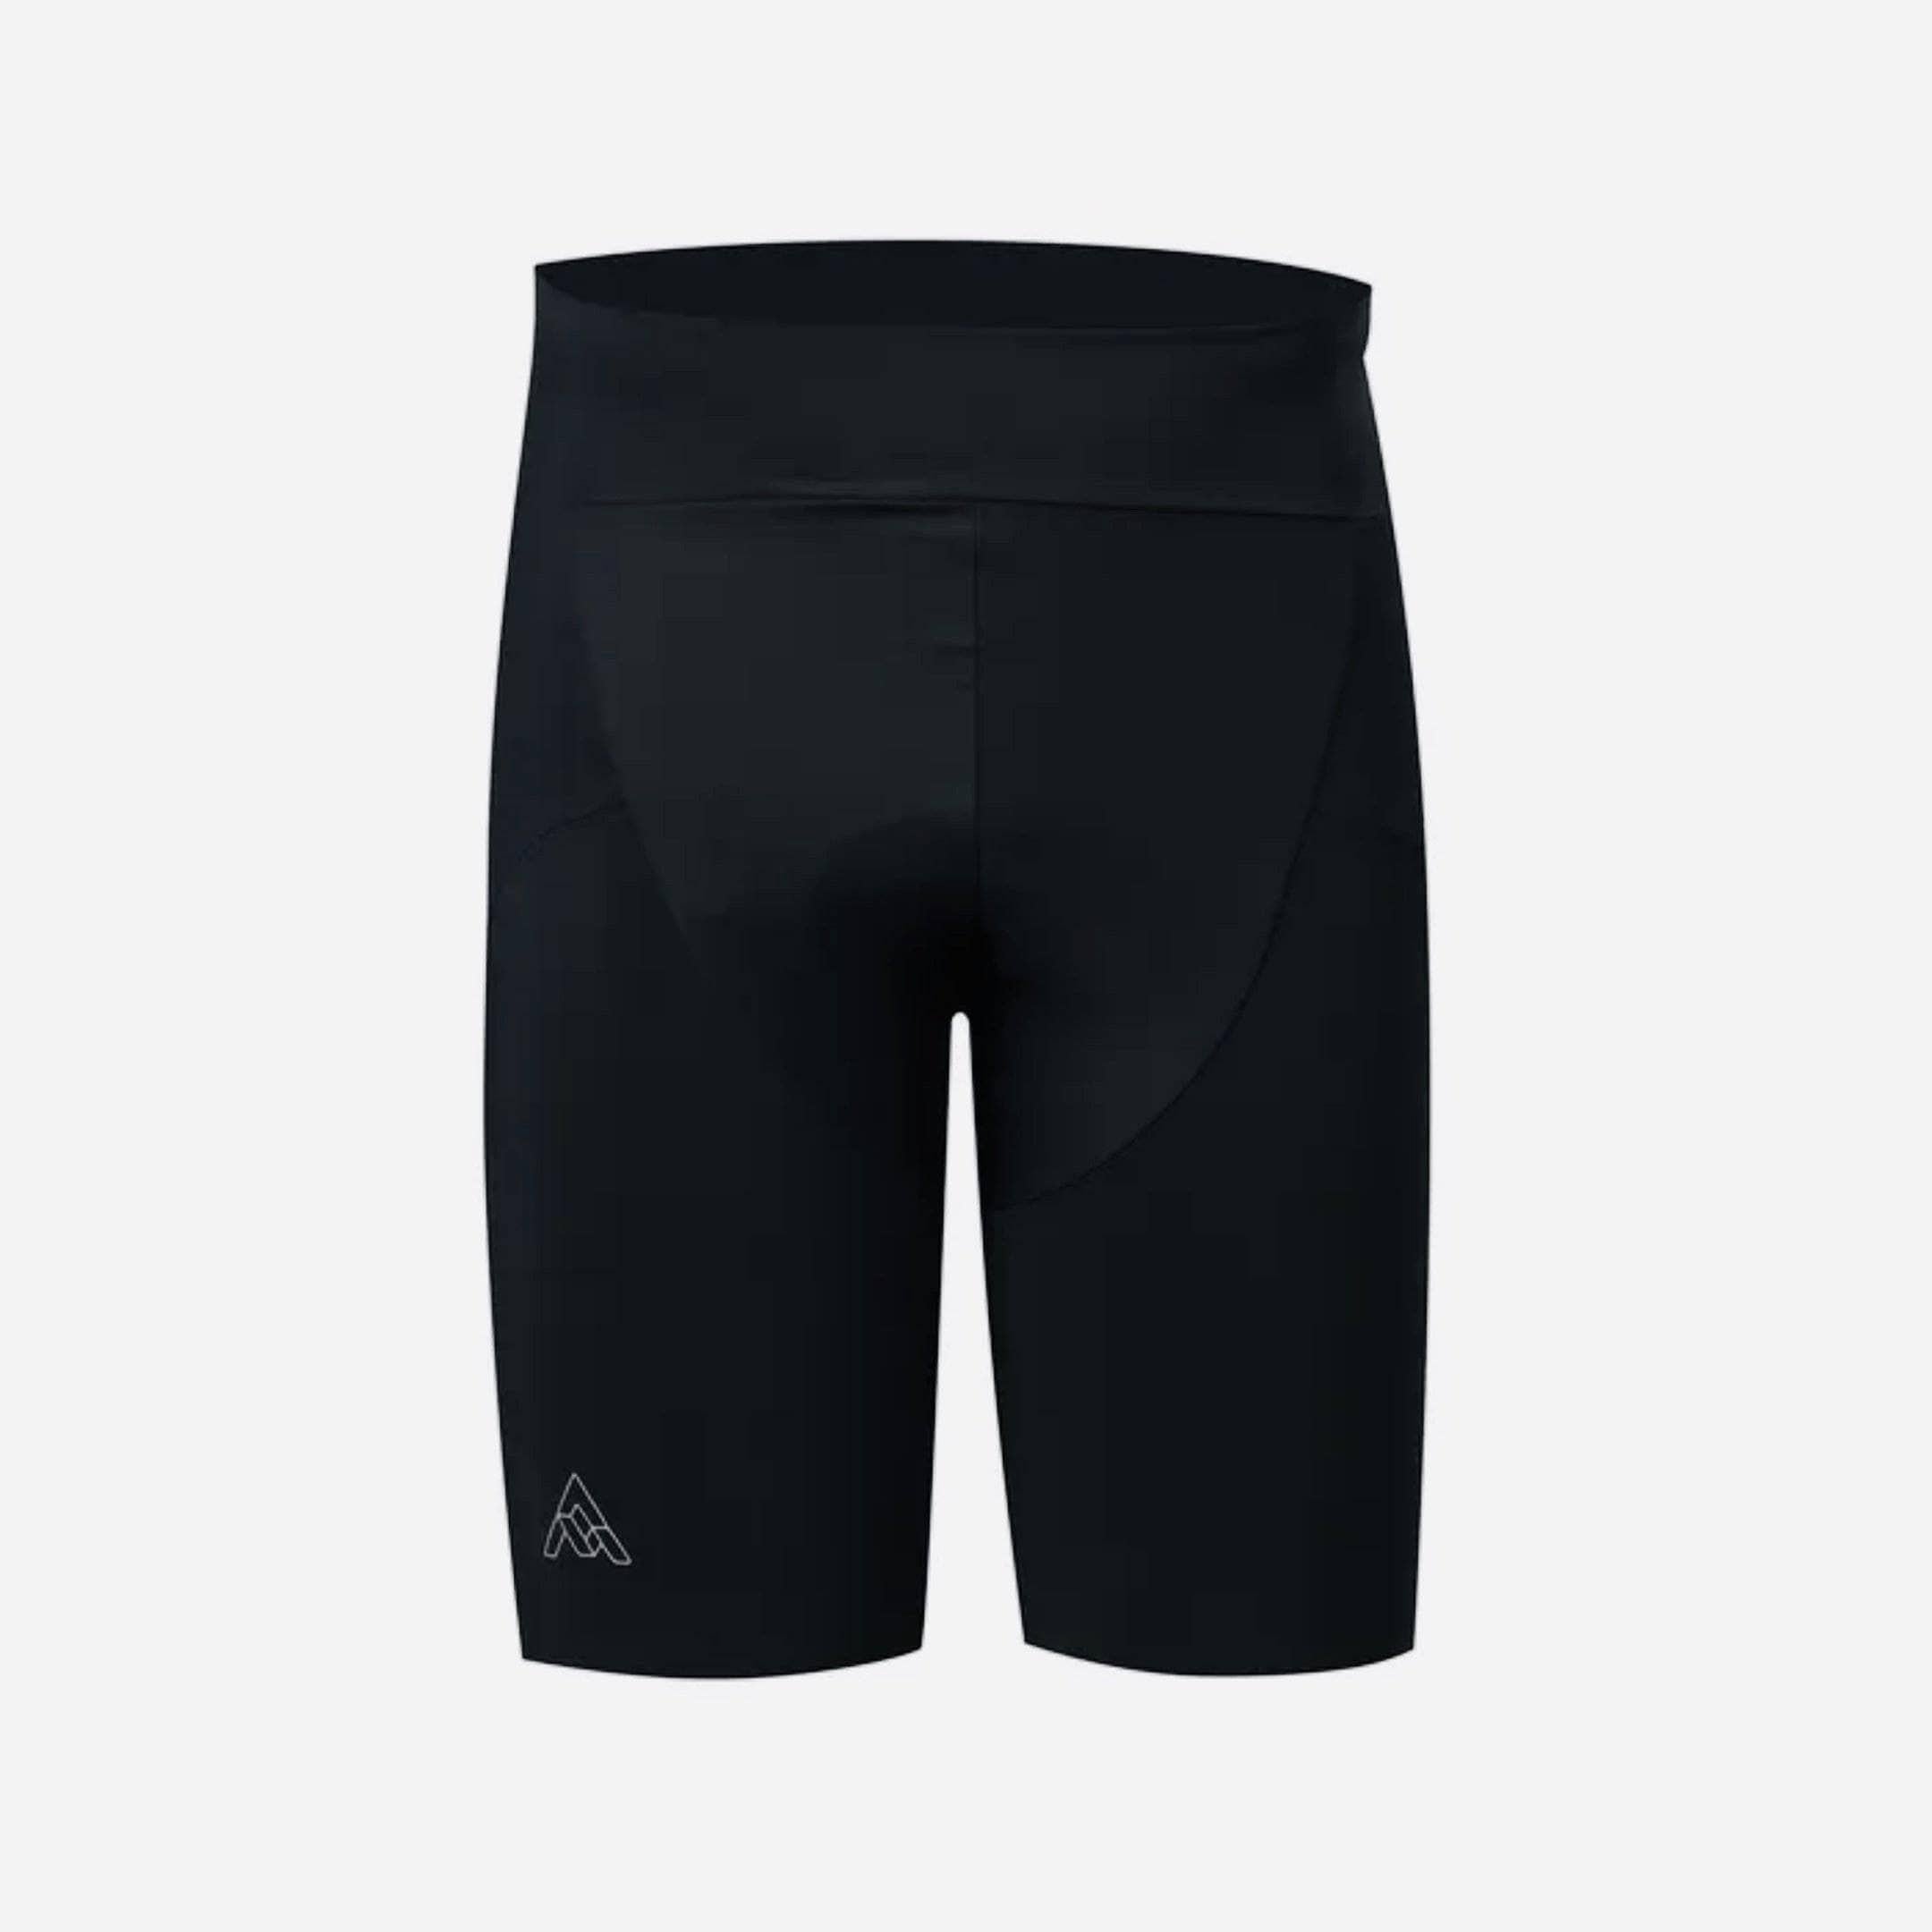 7mesh Men's MK3 Short Black / XS Apparel - Clothing - Men's Shorts - Road